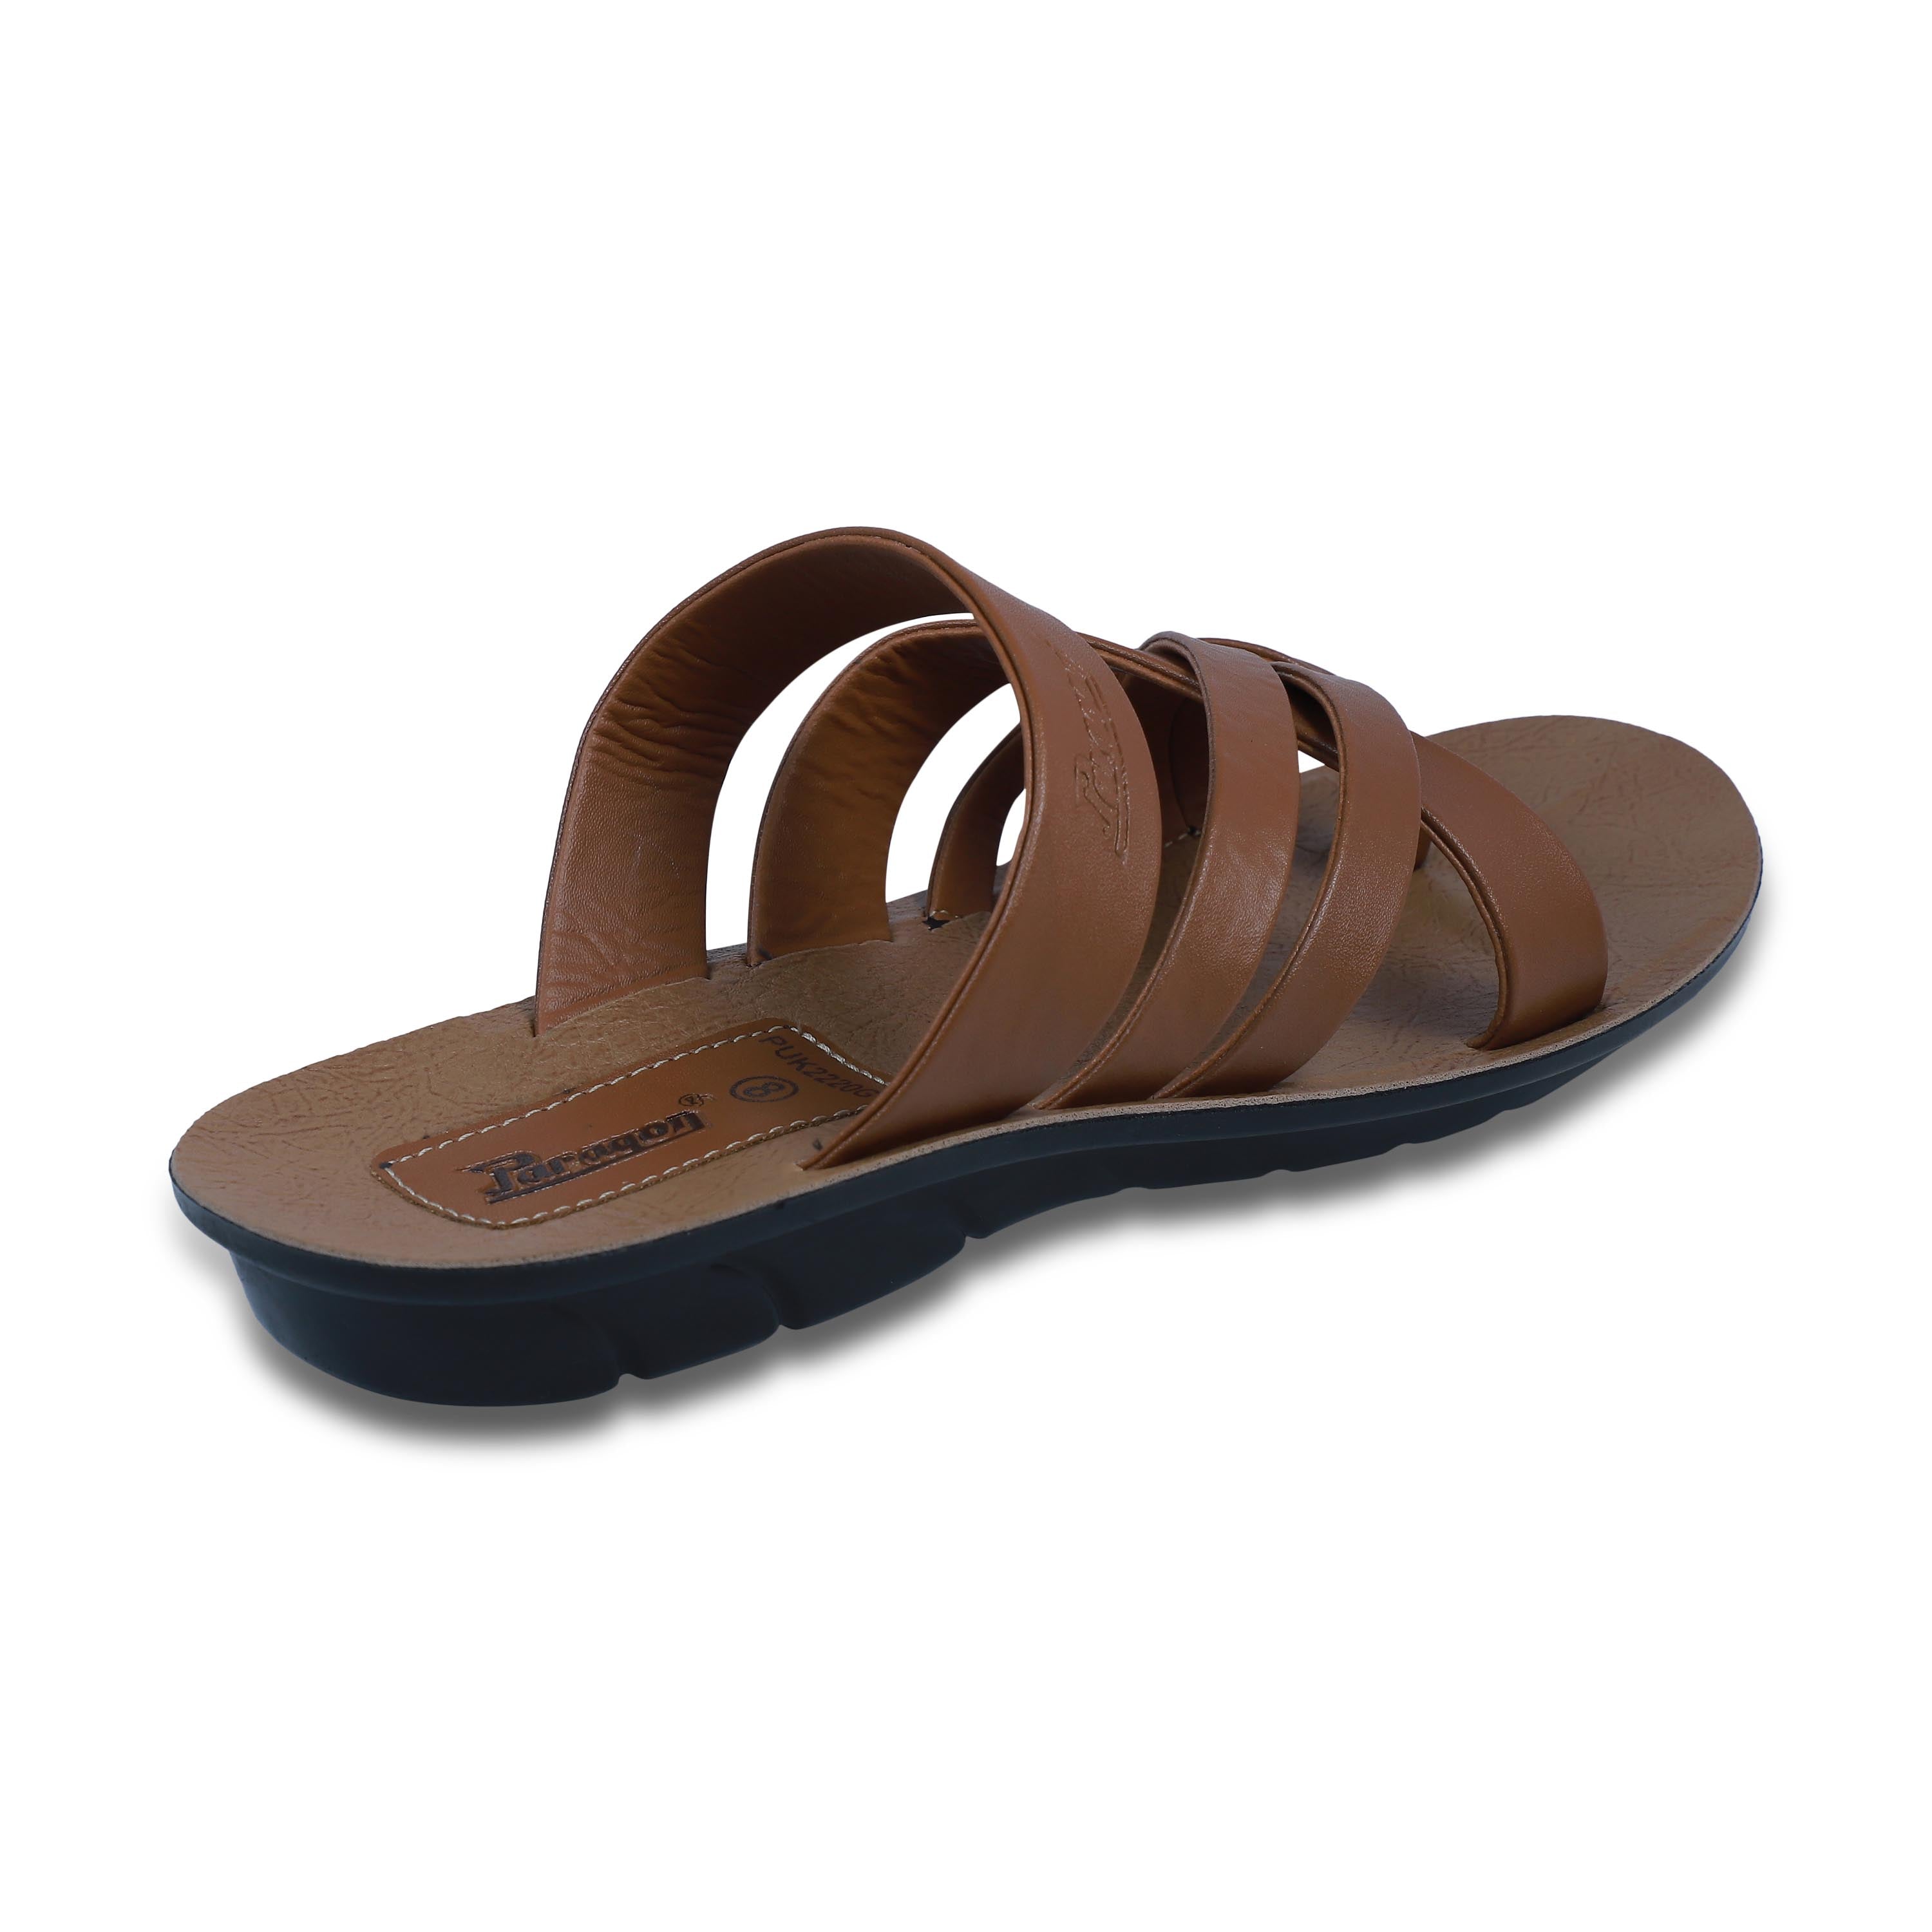 Paragon K2220G Ultra Comfortable &amp; Versatile Everyday Outdoor Sandals for Men